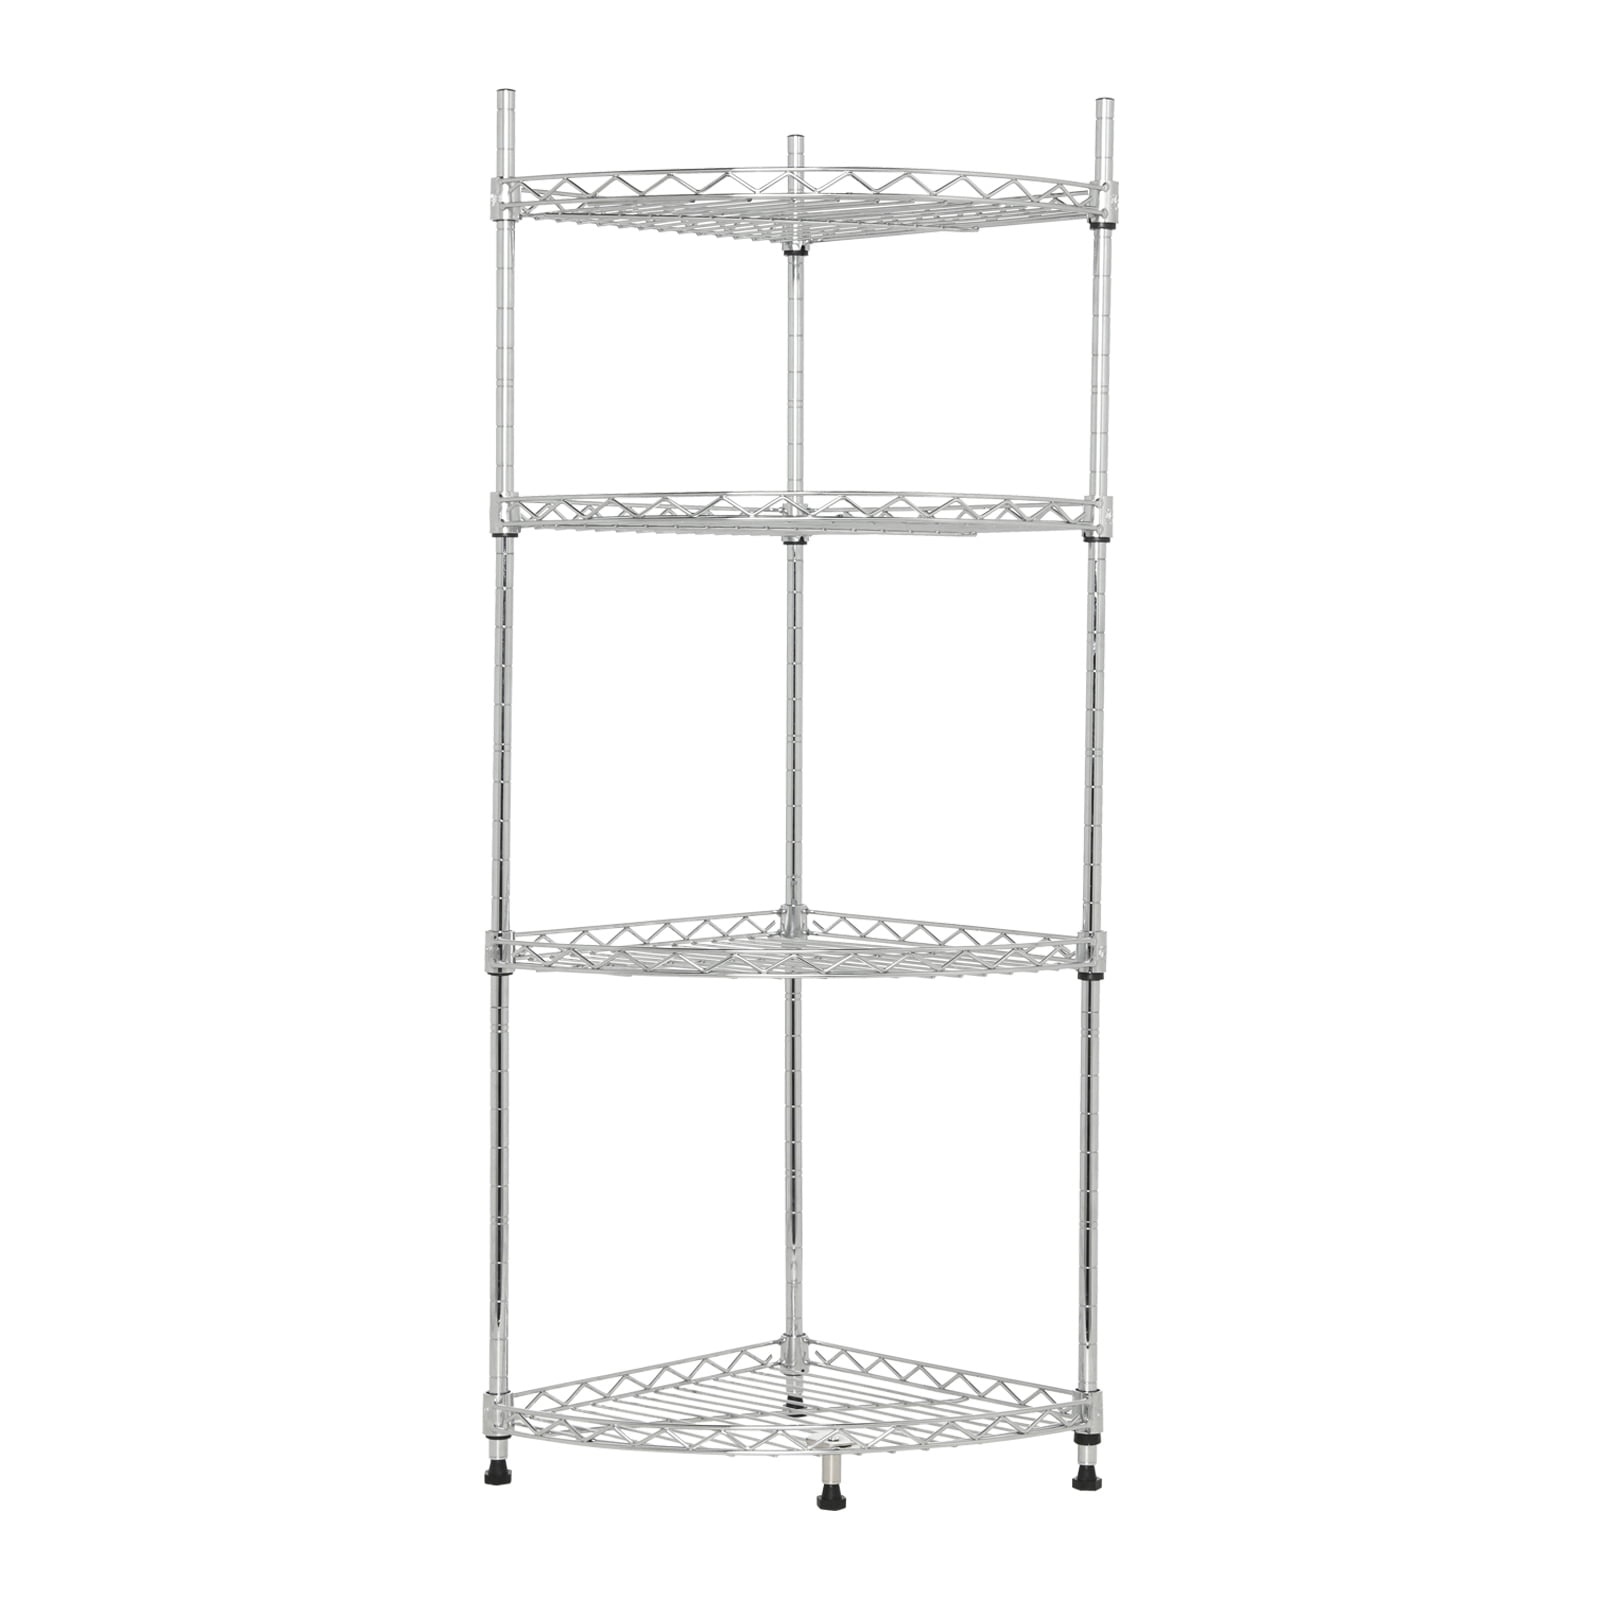 Free Standing Storage Rack For Living Room Bathroom Kitchen Office Garage 66lbs Weight Capacity Silver 4-Tier Wire Mesh Corner Shelf 30x30x88 